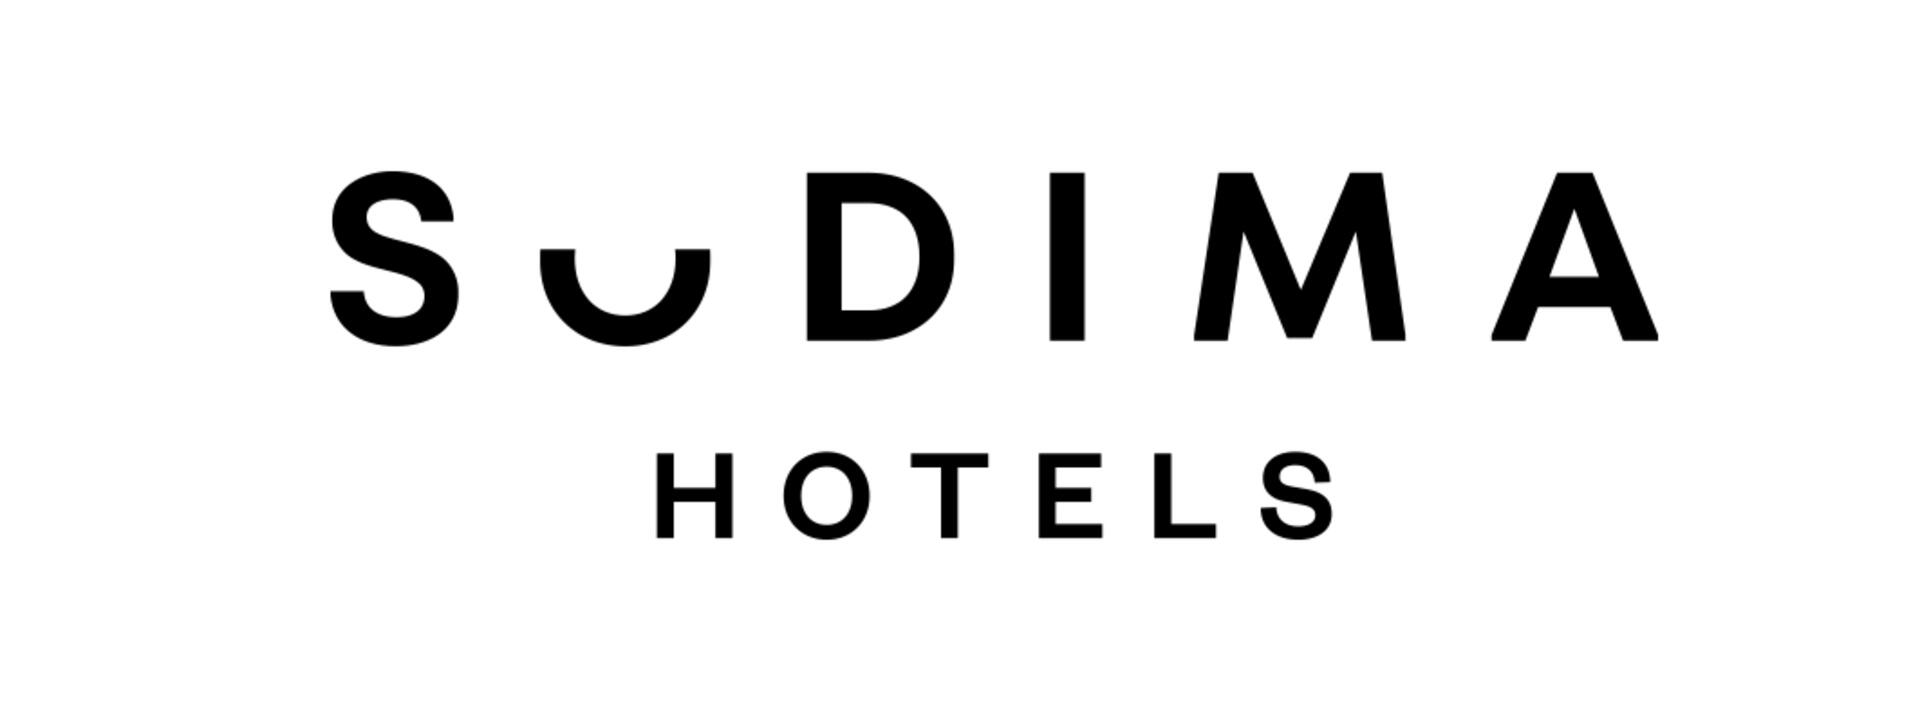 sudima-hotels-master-black-jpeg_7.jpg